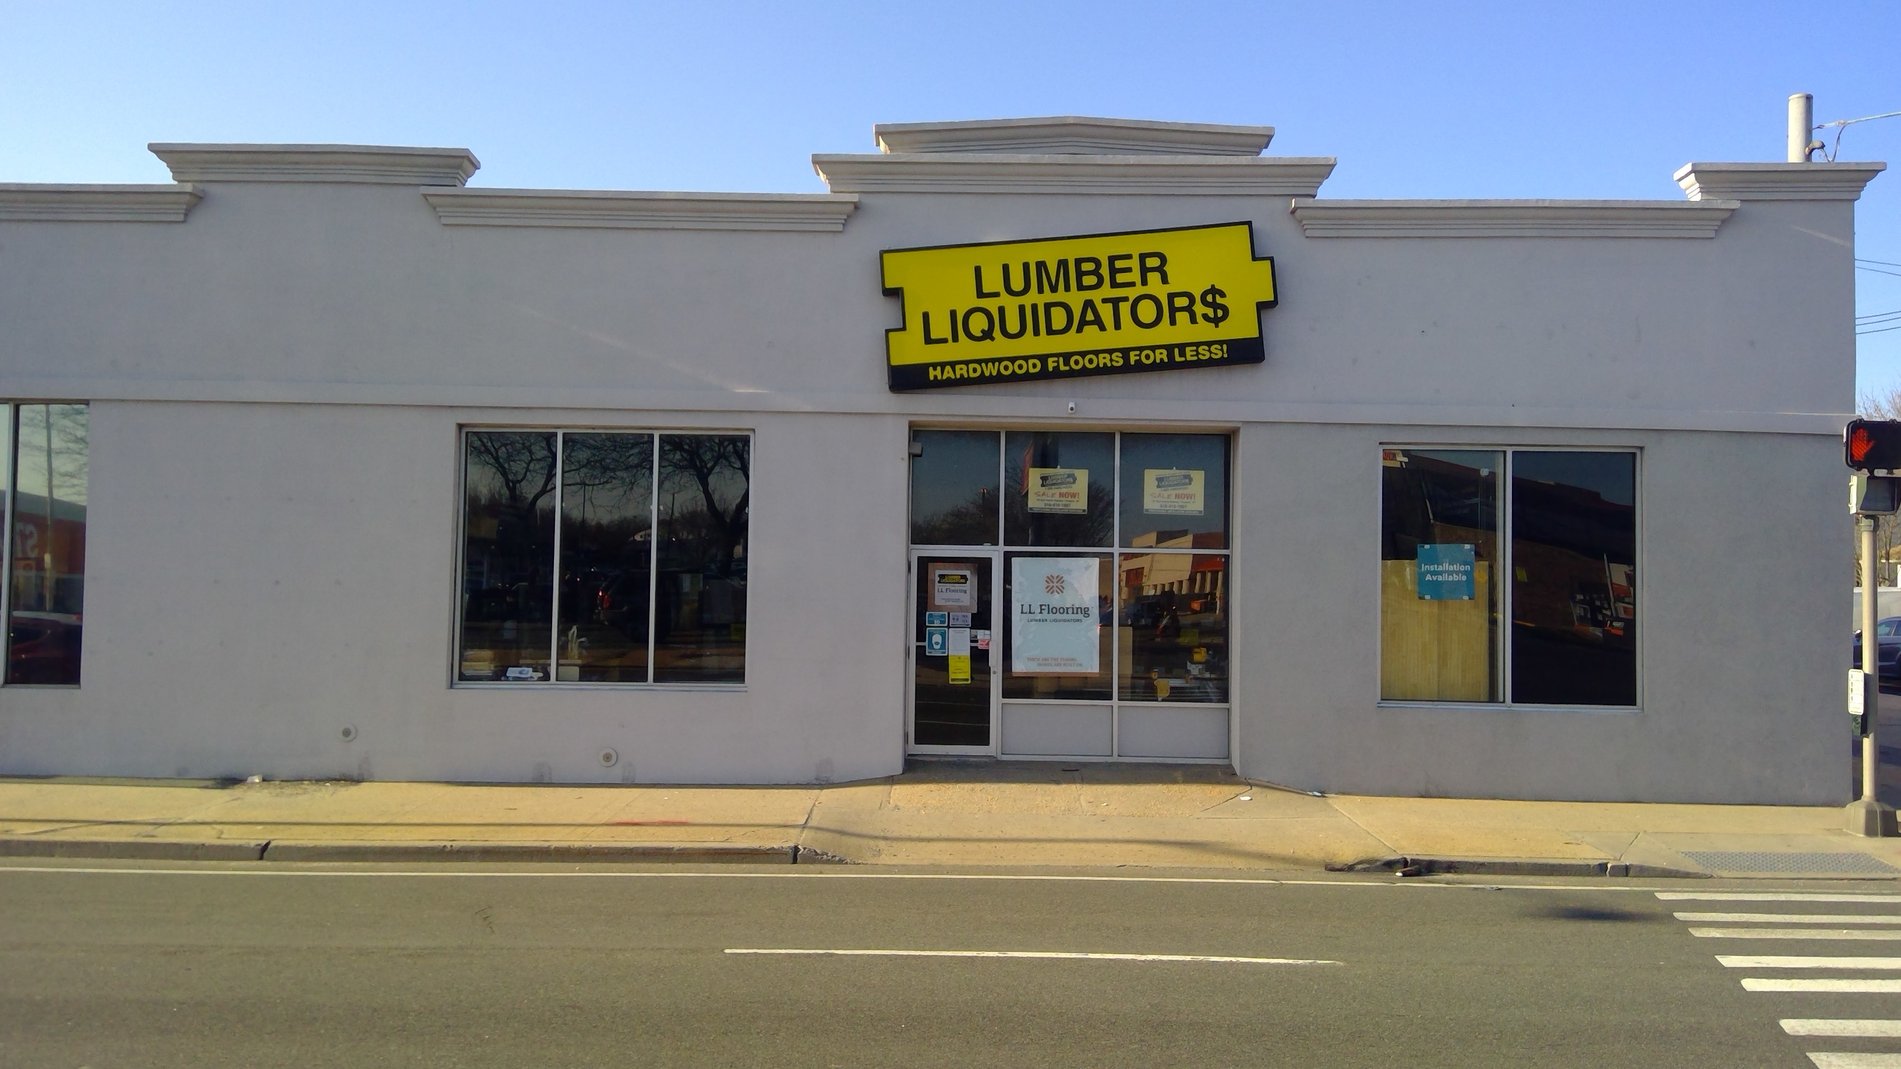 LL Flooring #1294 Freeport | 137 East Sunrise Highway | Storefront